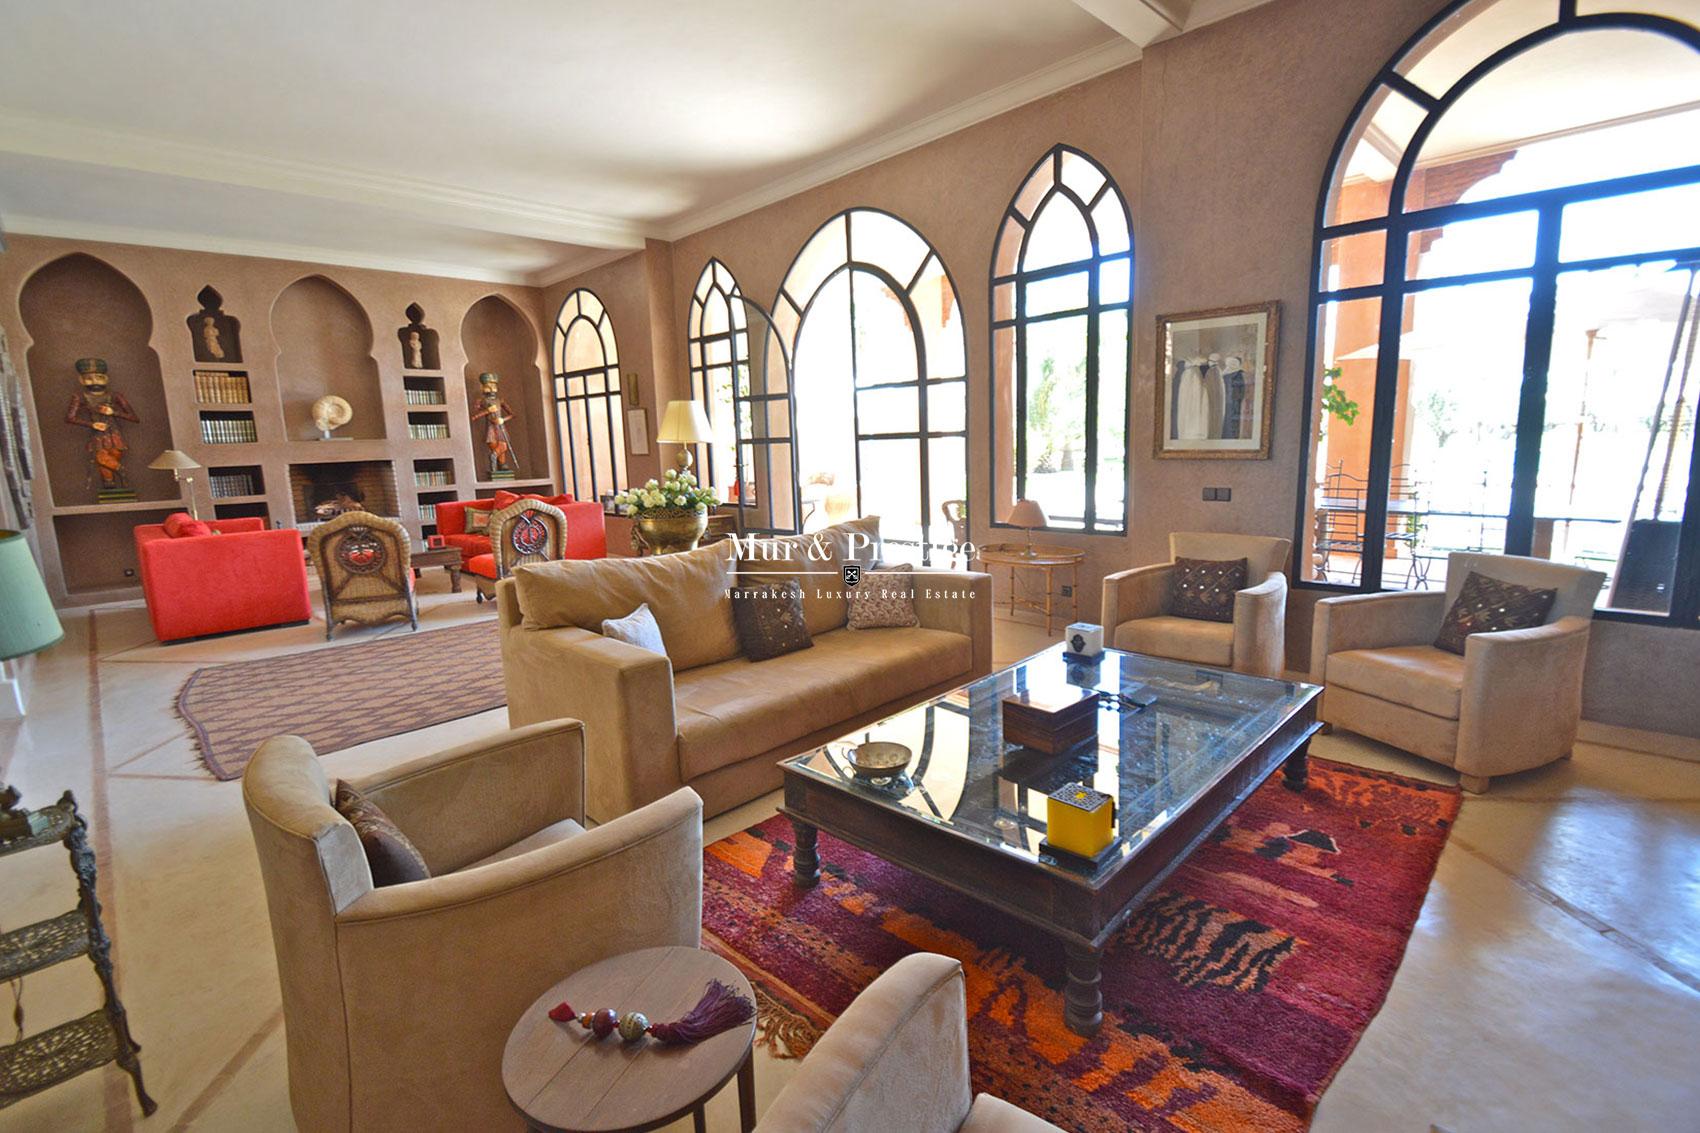 Vente villa de charme Marrakech - copie